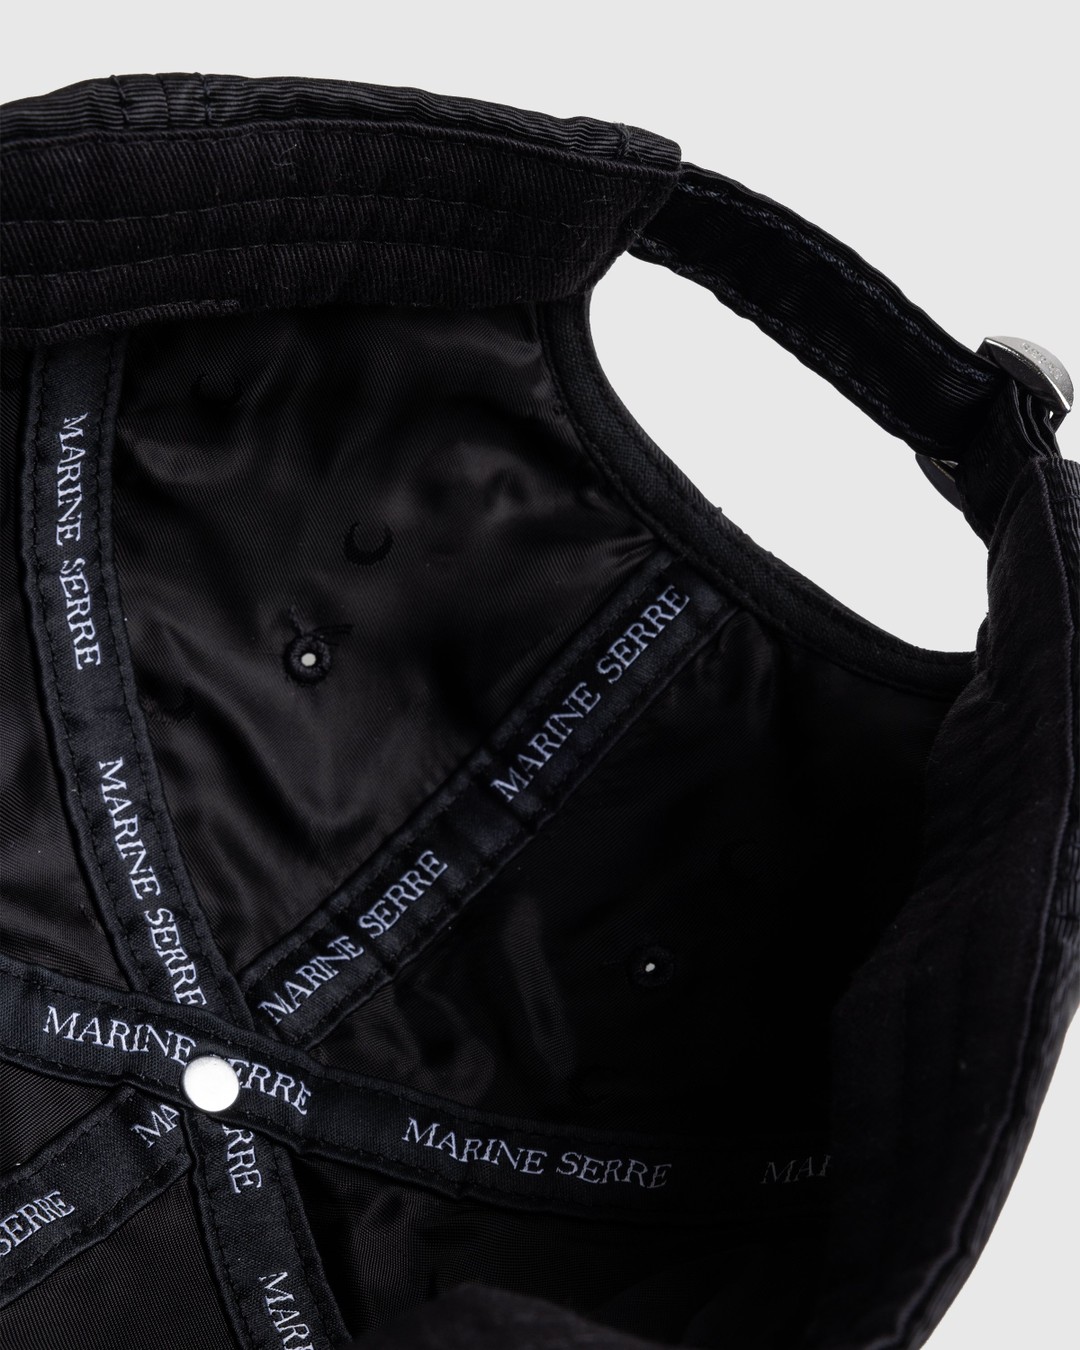 Marine Serre – Embroidered Regenerated Moire Cap Black - Hats - Black - Image 5